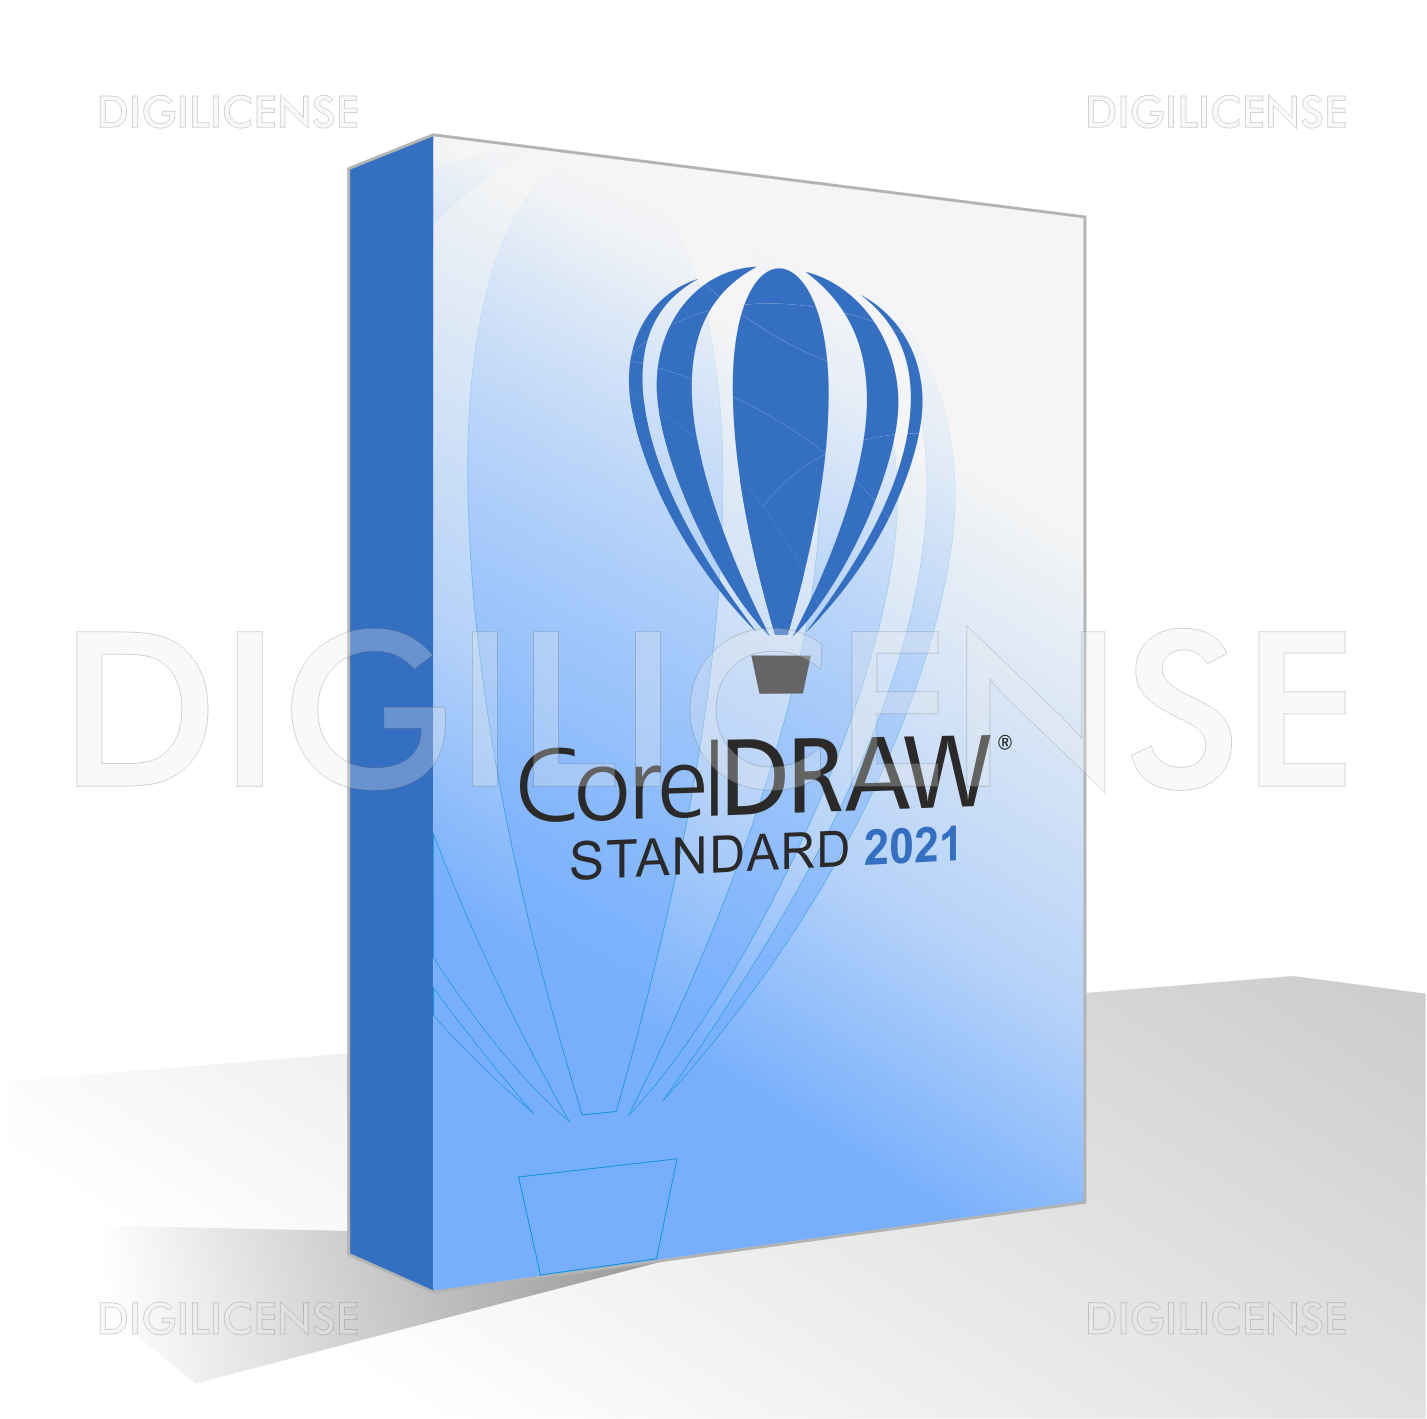 CorelDRAW Standard 2021 1 device Perpetual license